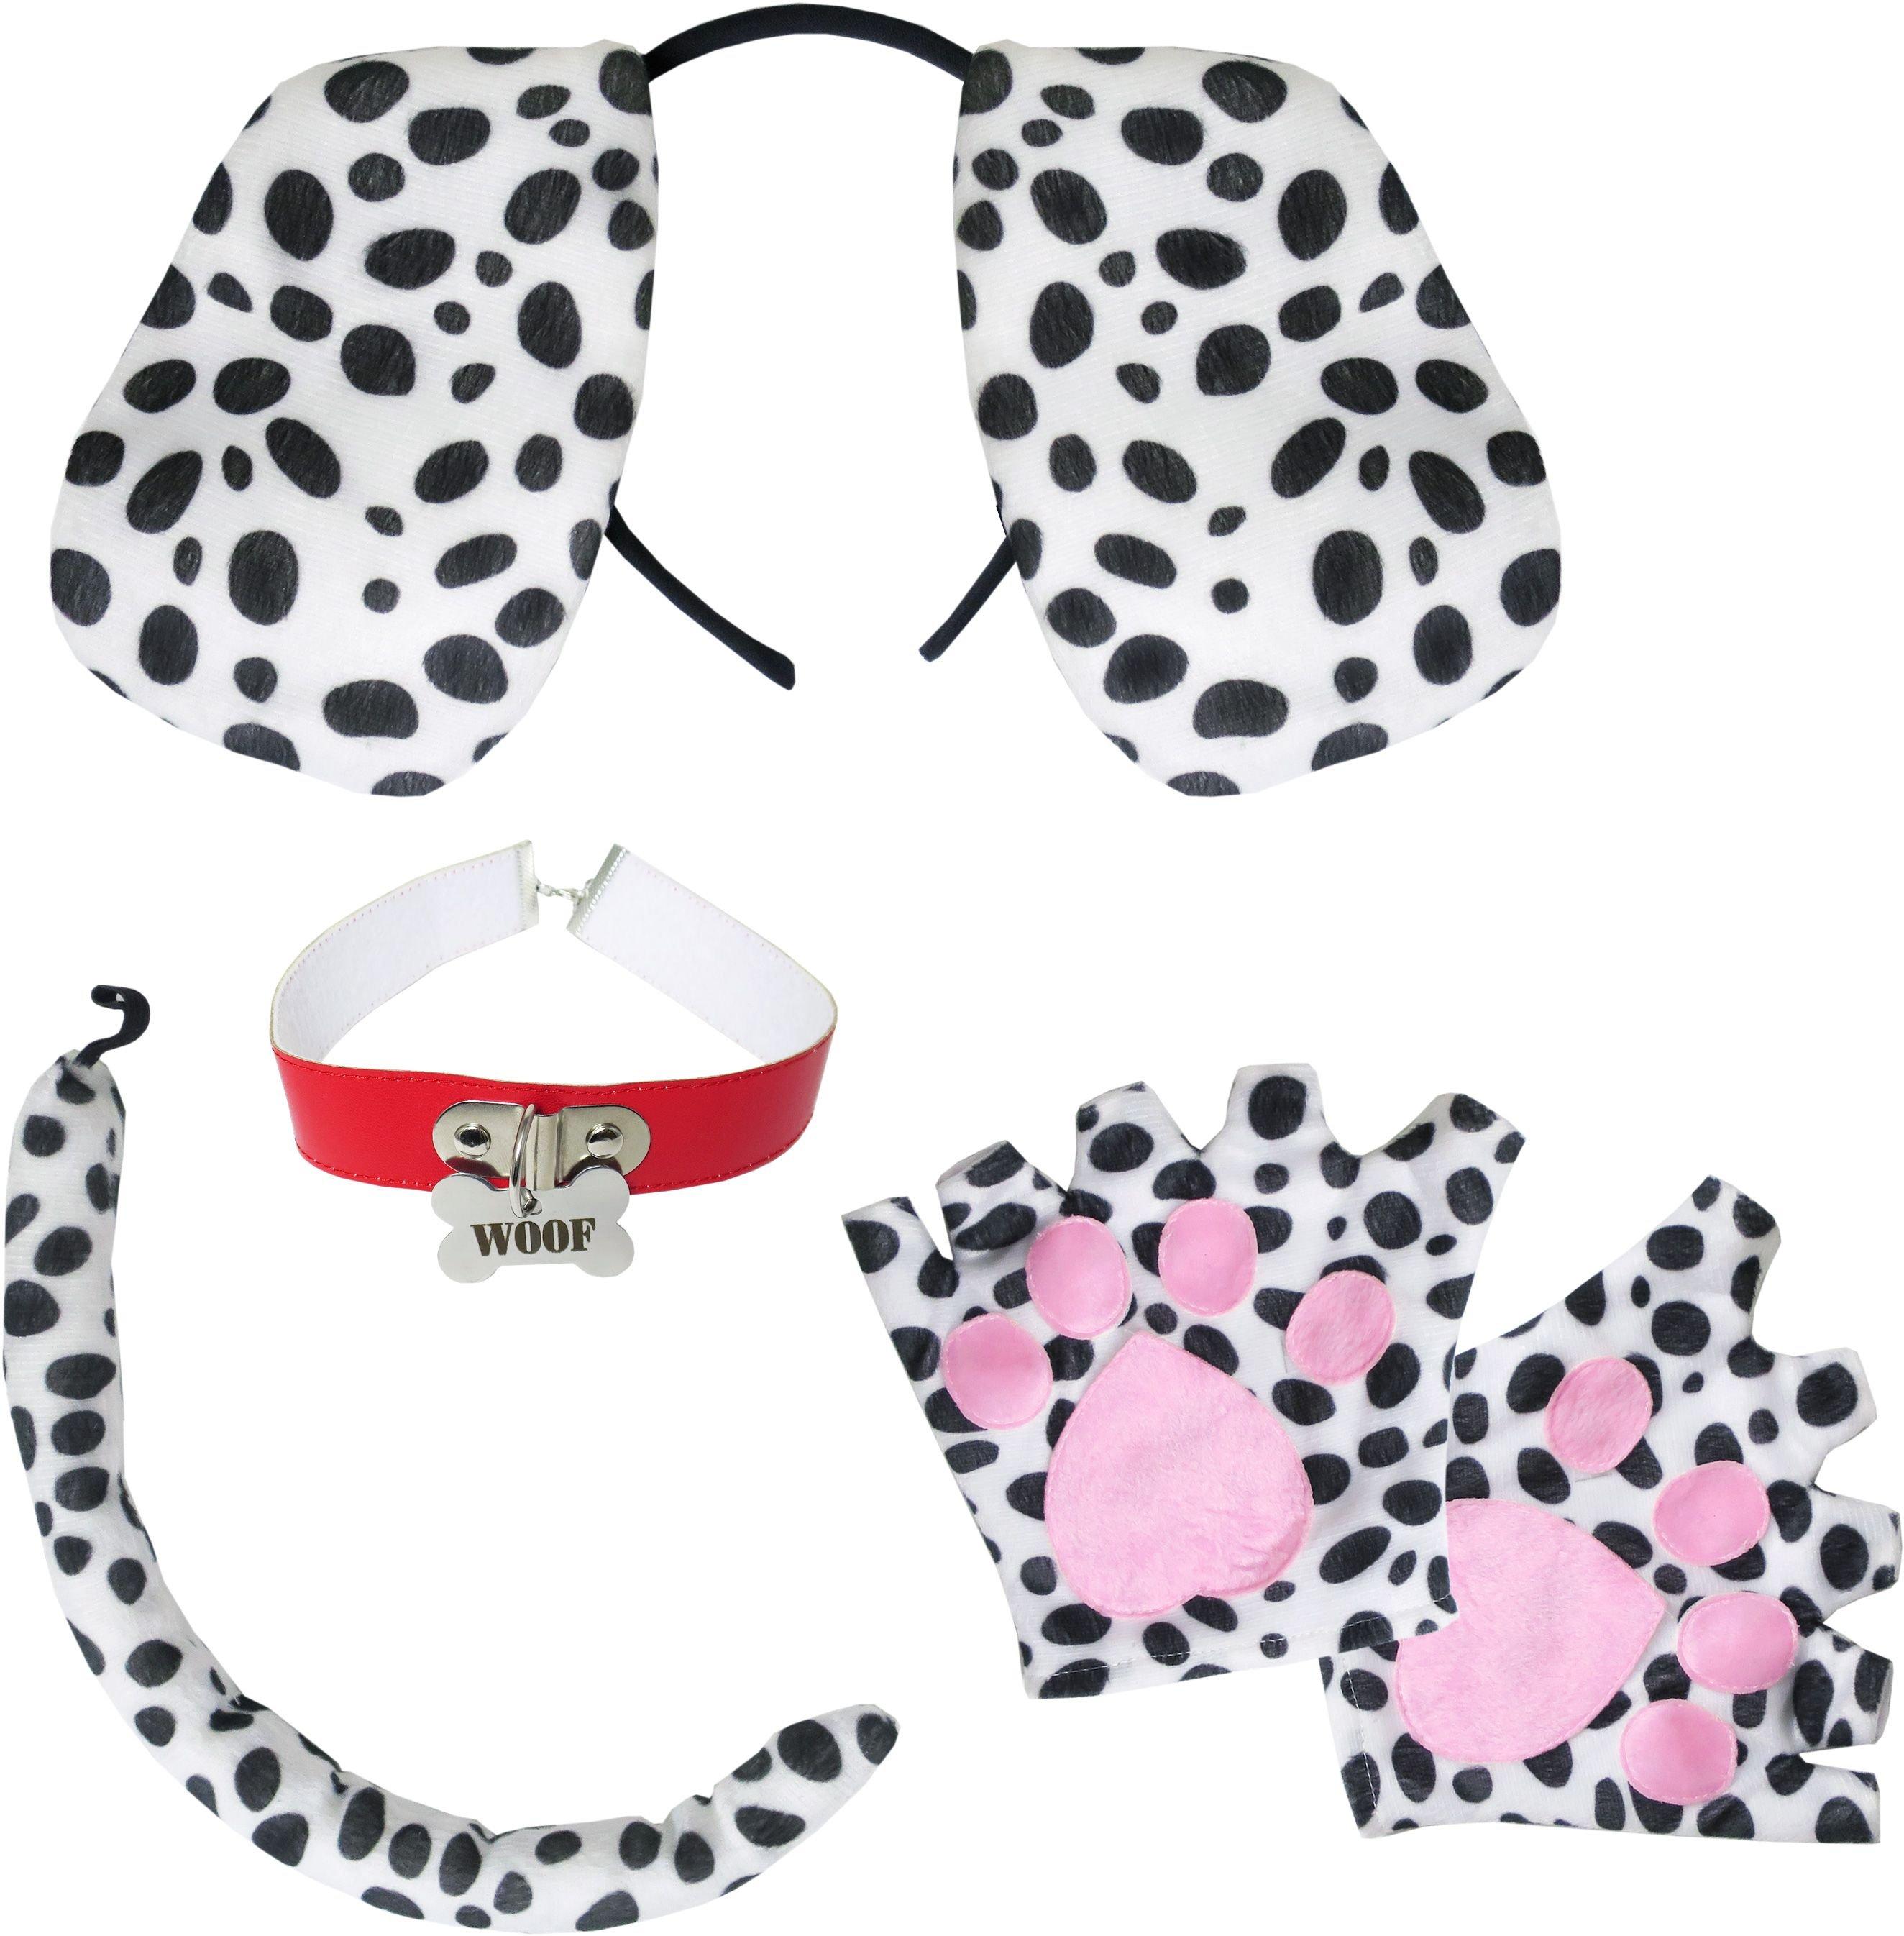 Dalmatian Costume Accessory Kit | Party City